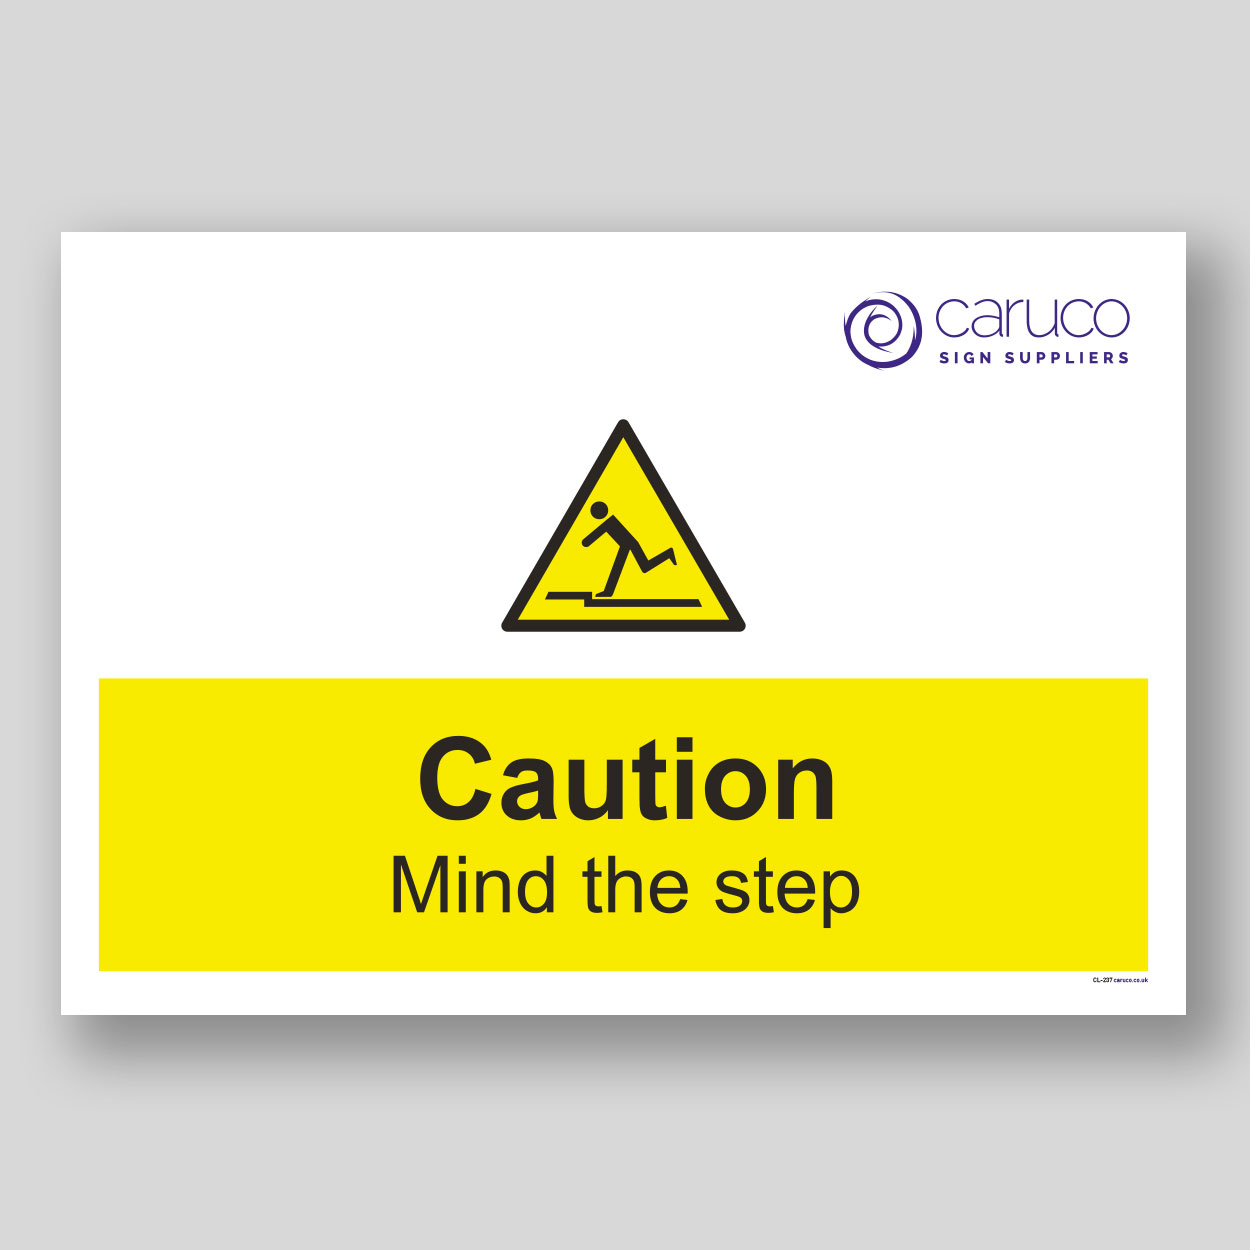 CL-237 Caution - mind the step